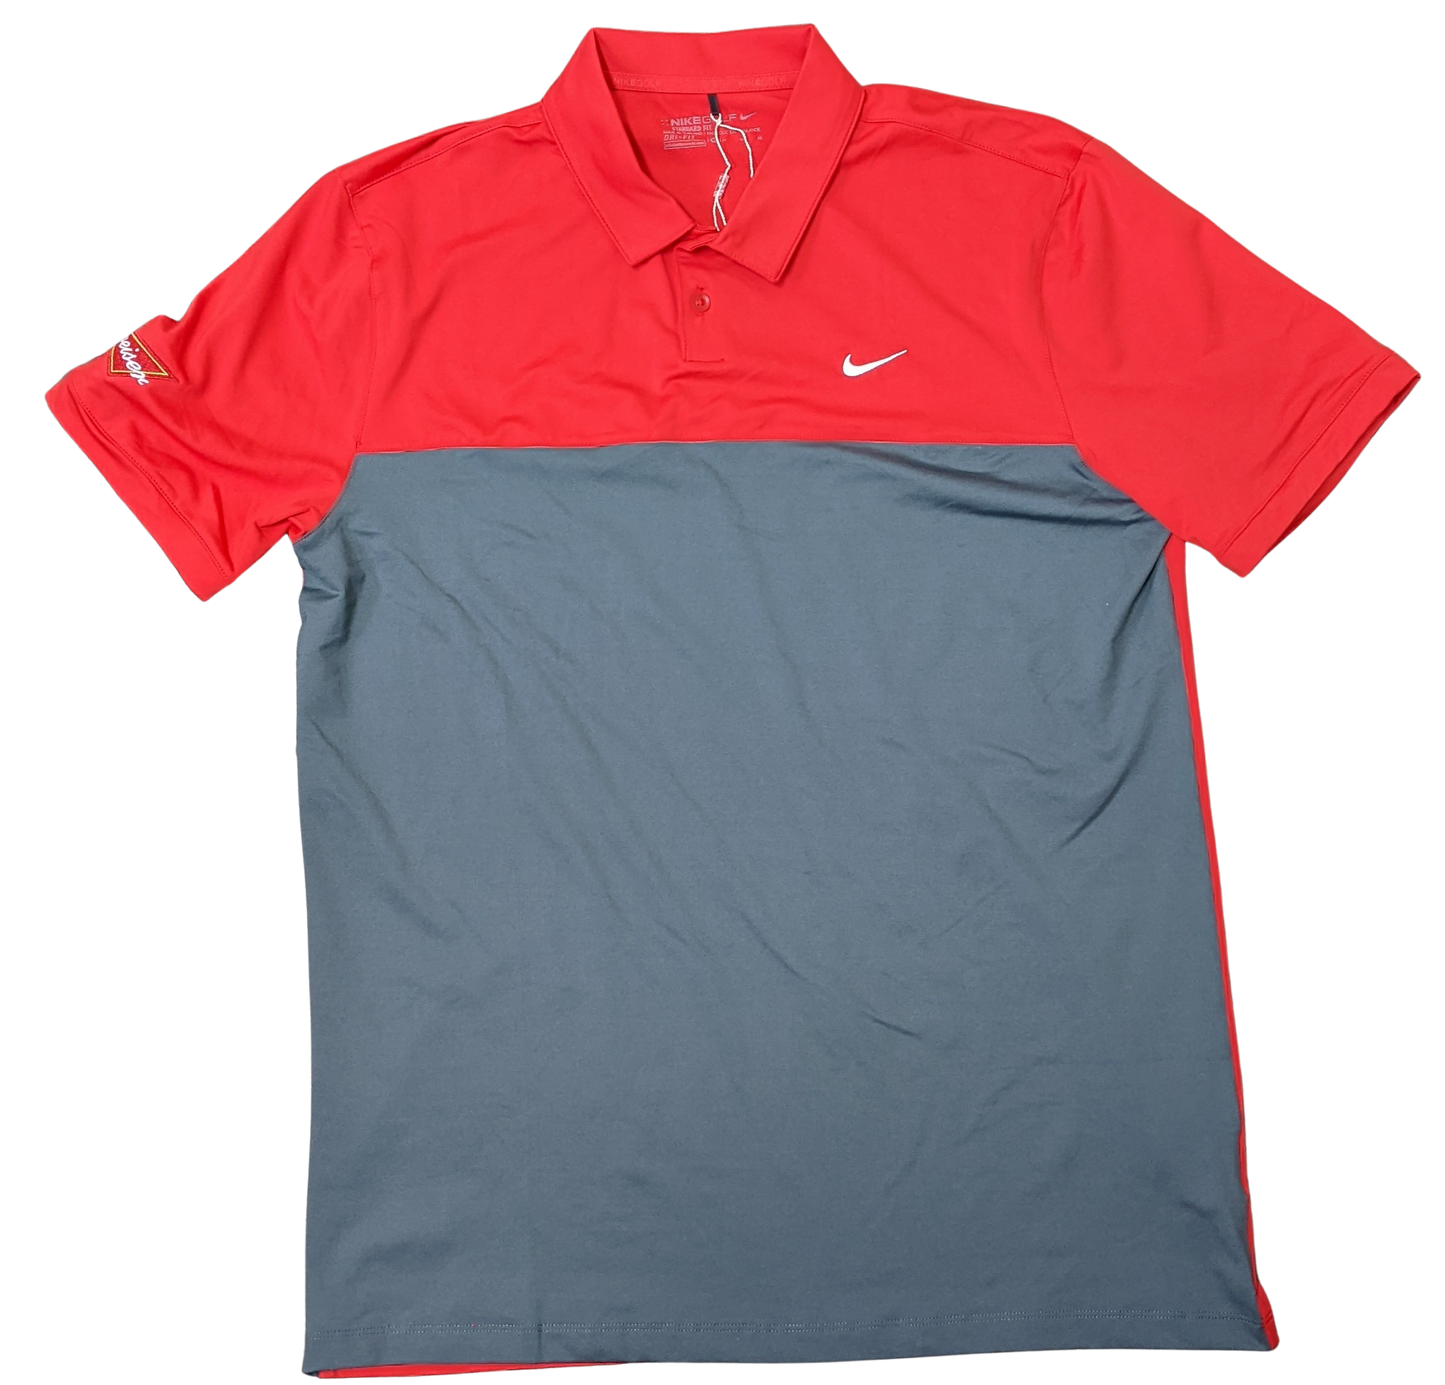 Men's Nike Golf Shirt | Budweiser | Columbia Brewery | Kokanee Beer Gear Store | Creston BC